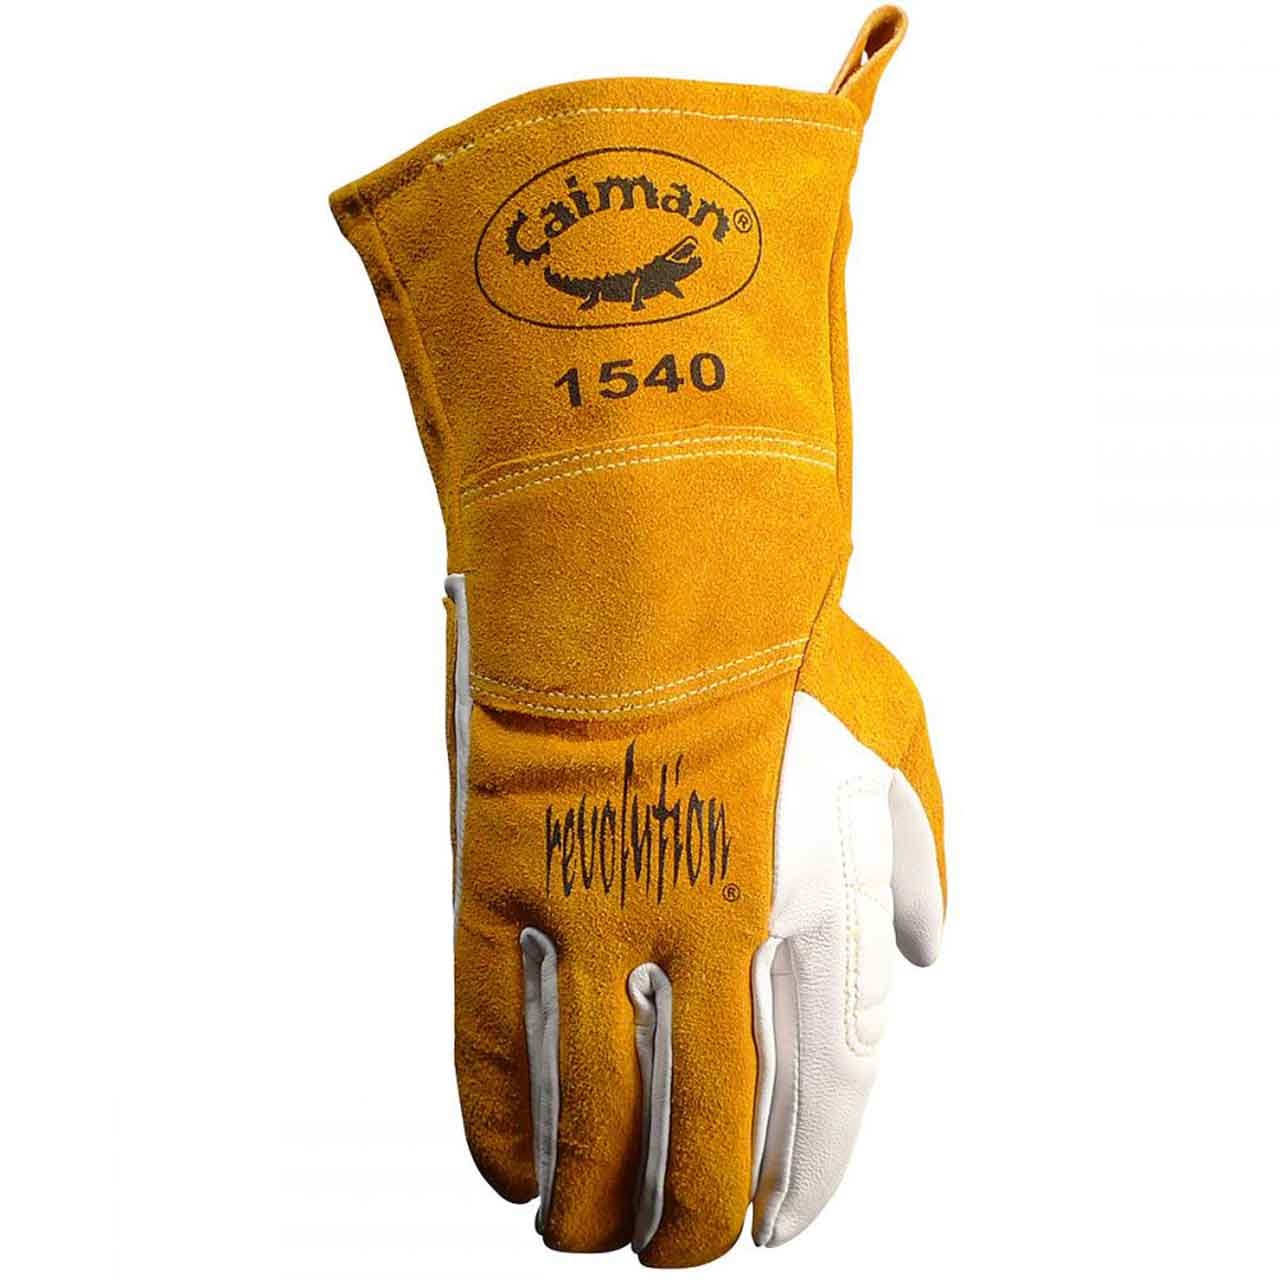 Caiman 1540 Welding Gloves